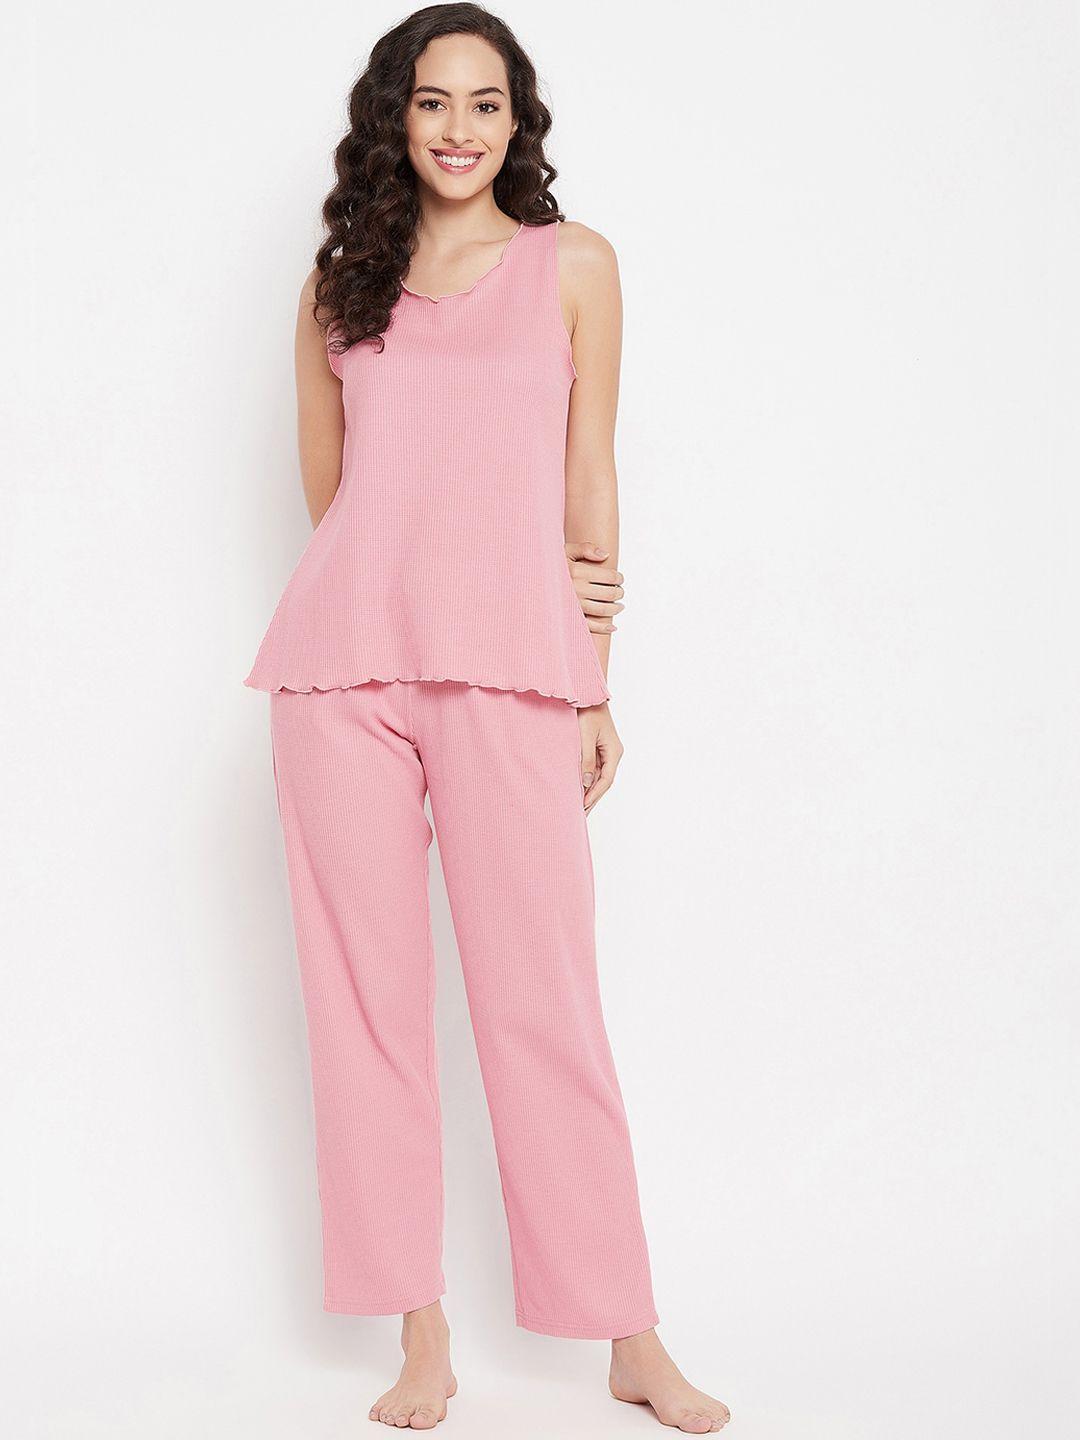 clovia women pink solid night suit